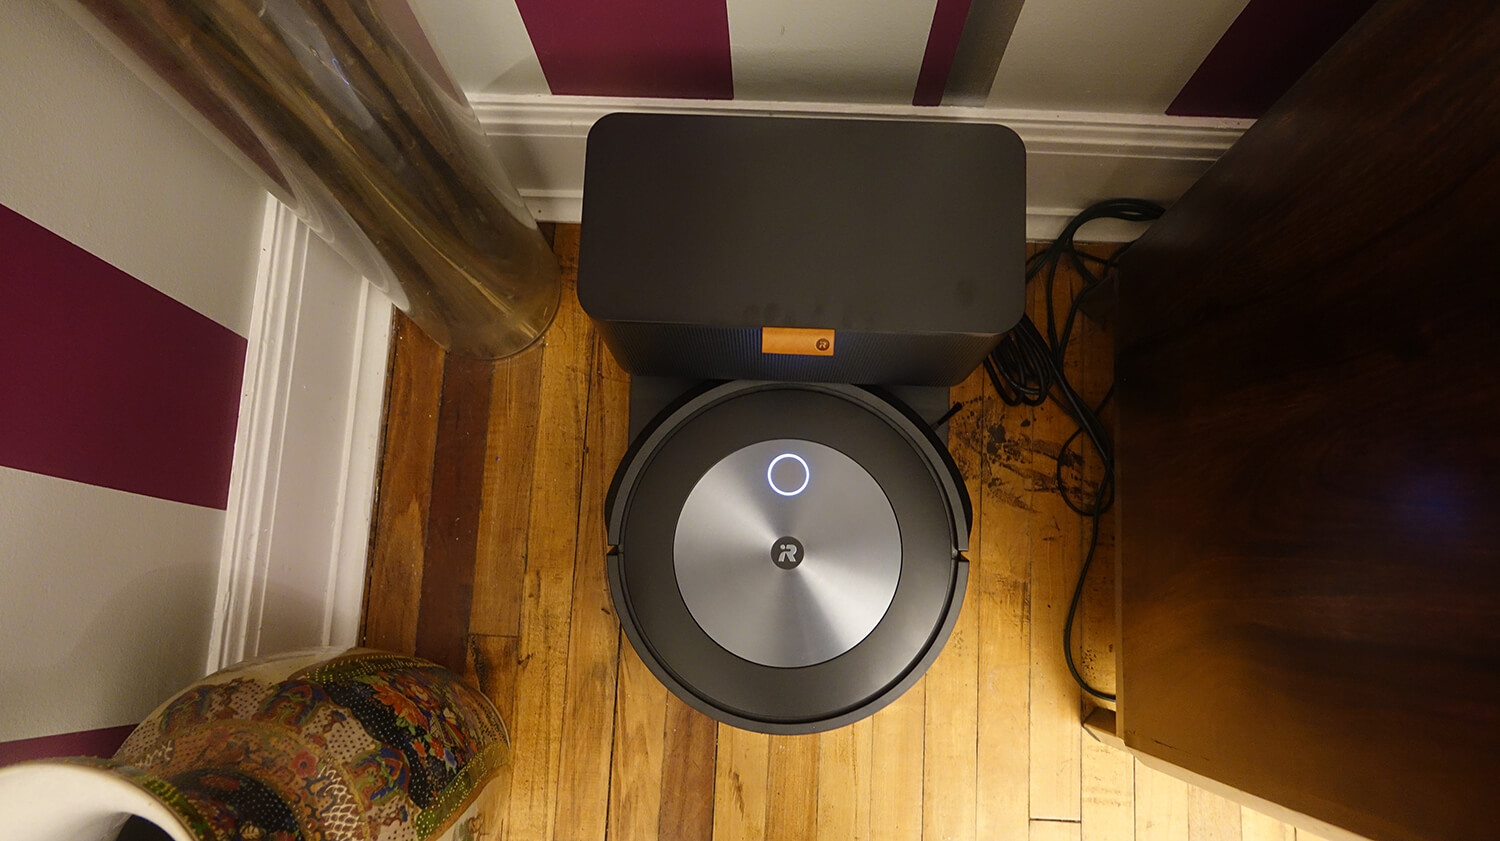 Overhead view of the iRobot Roomba j7+